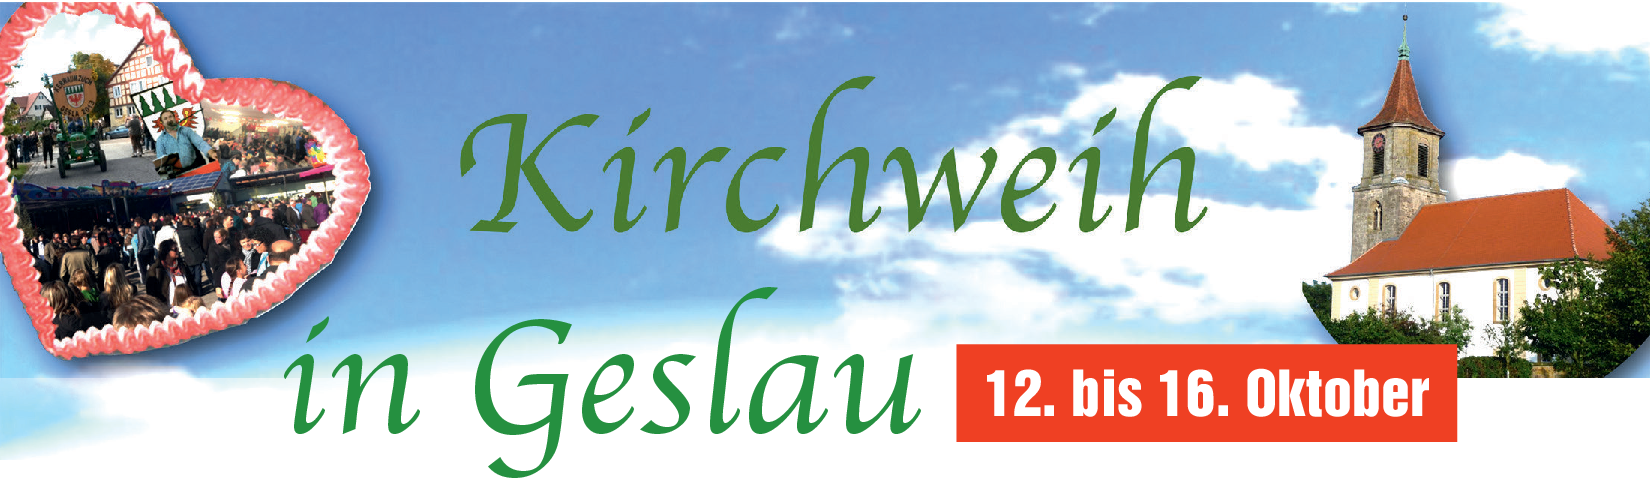 Kirchweih in Geslau: Kirchweih-Programm